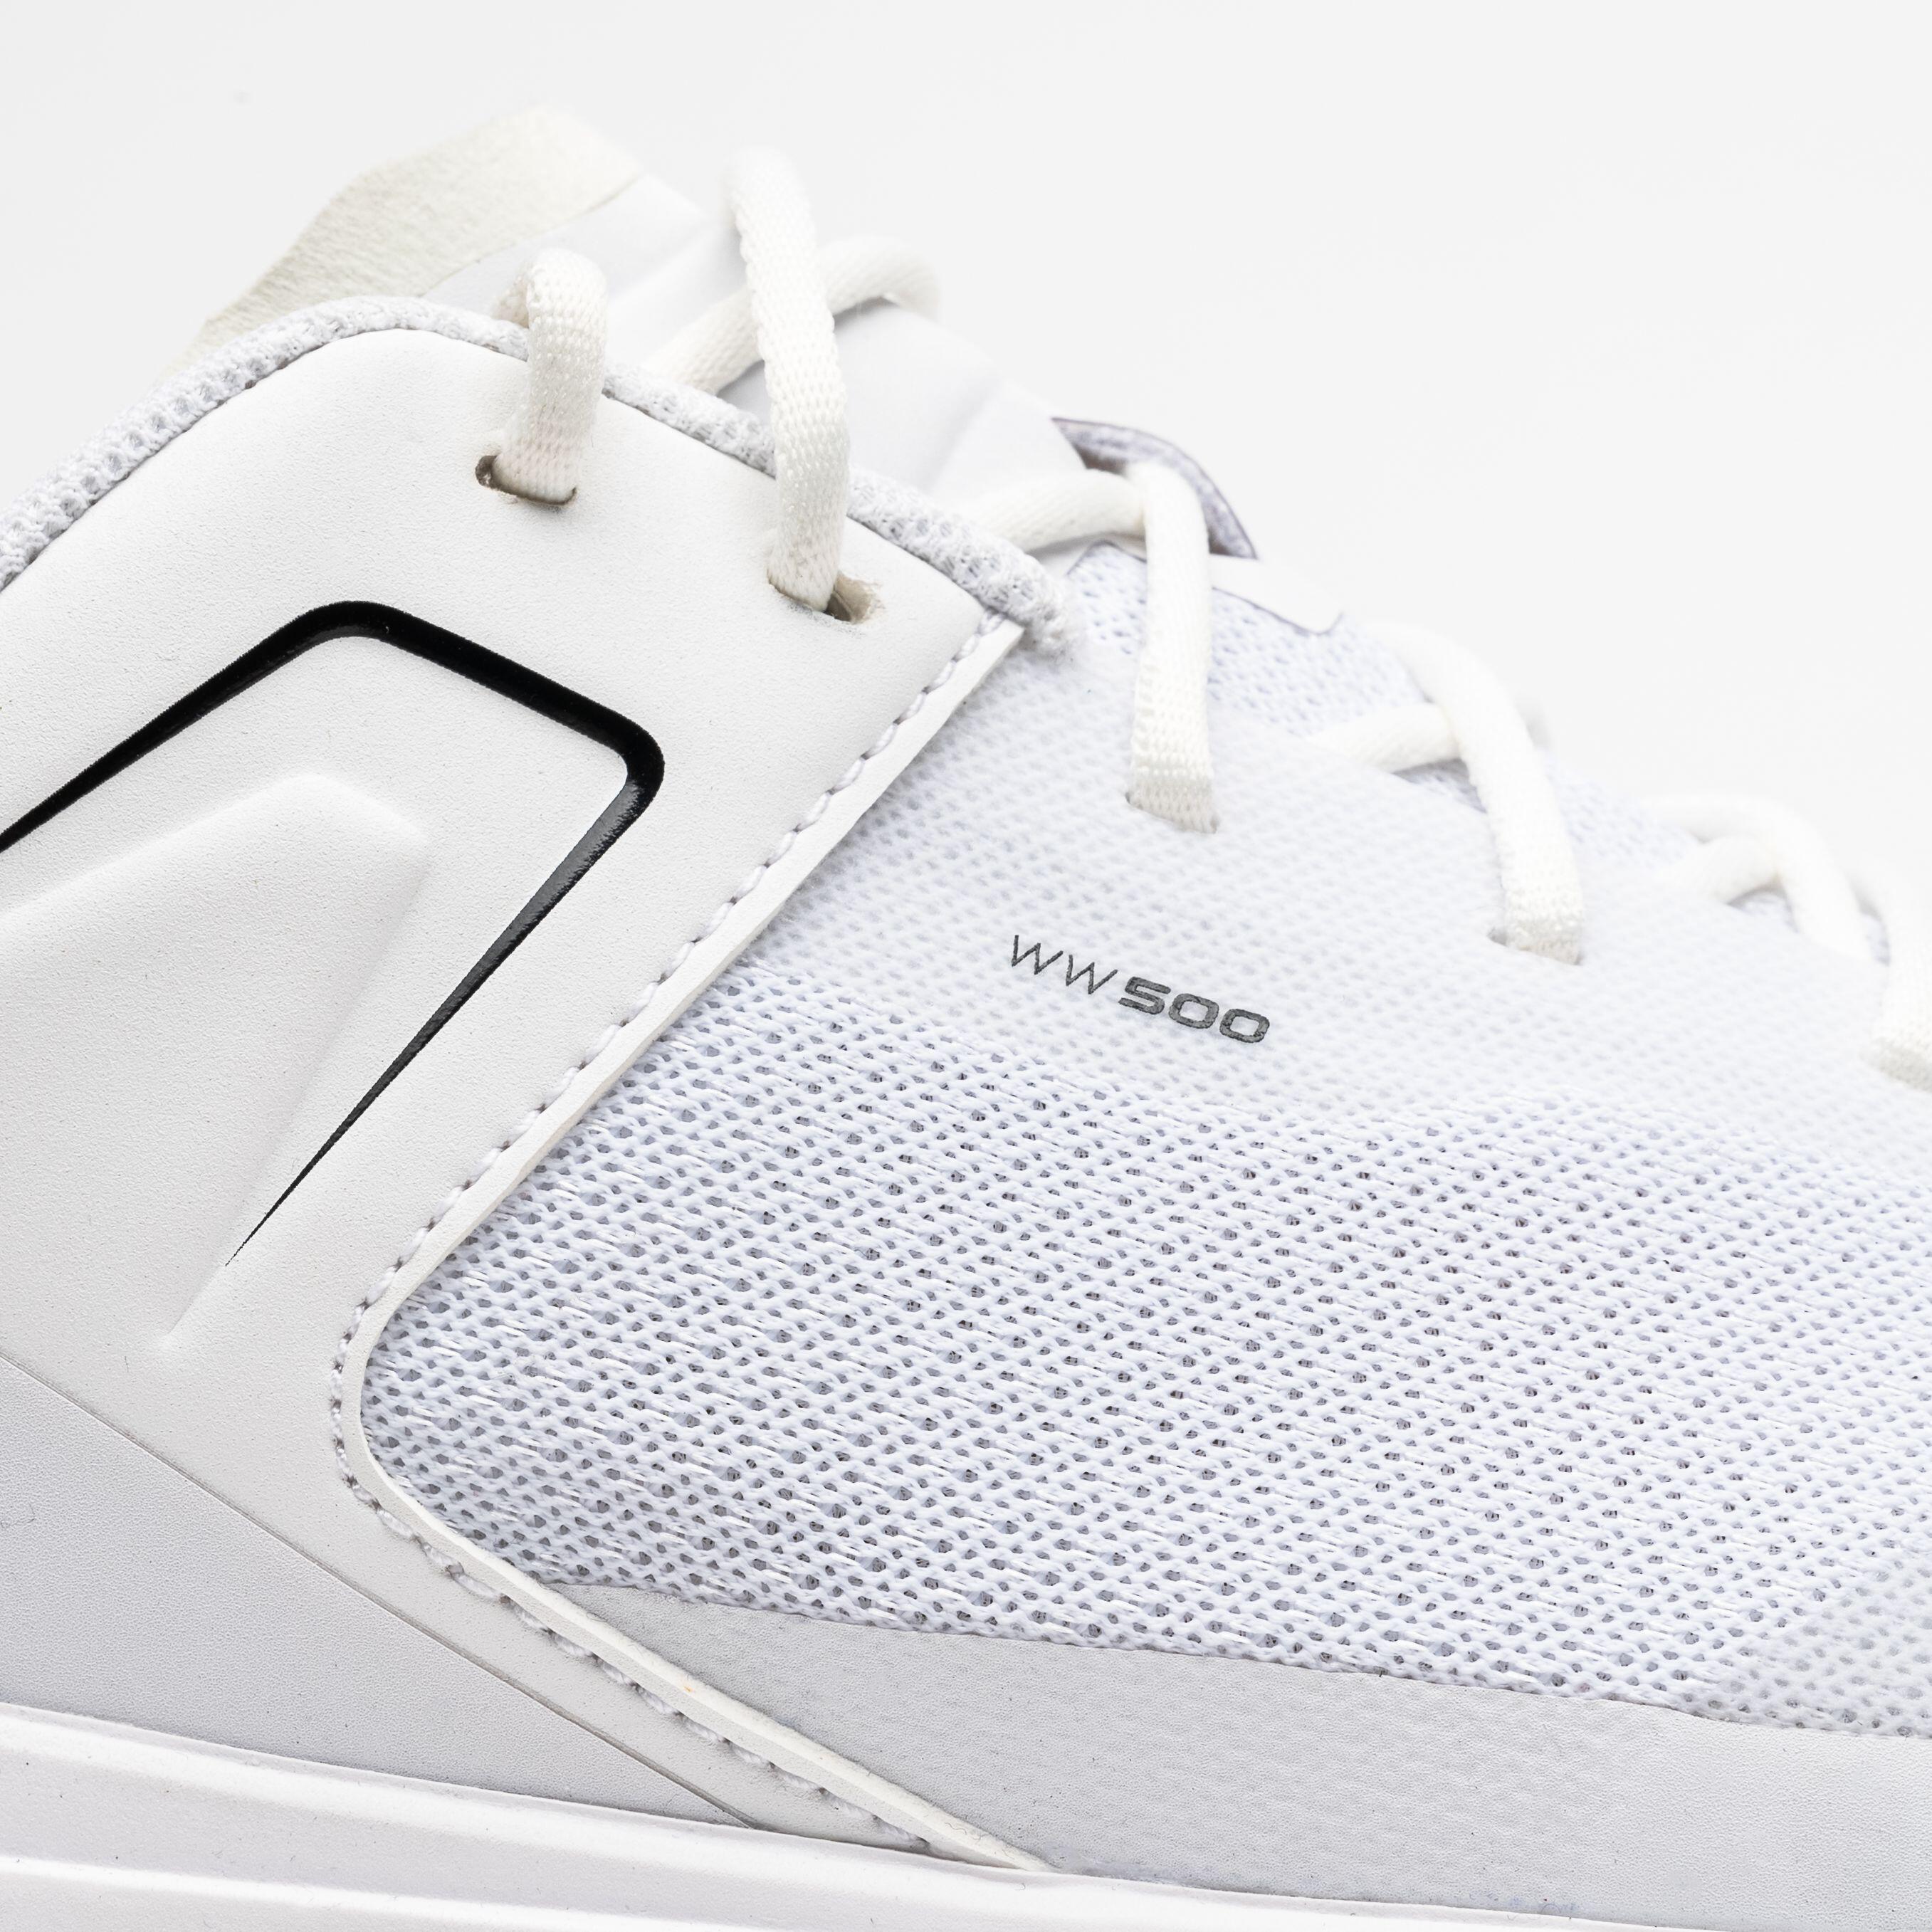 Men's Golf Breathable Shoes - WW 500 White 5/6